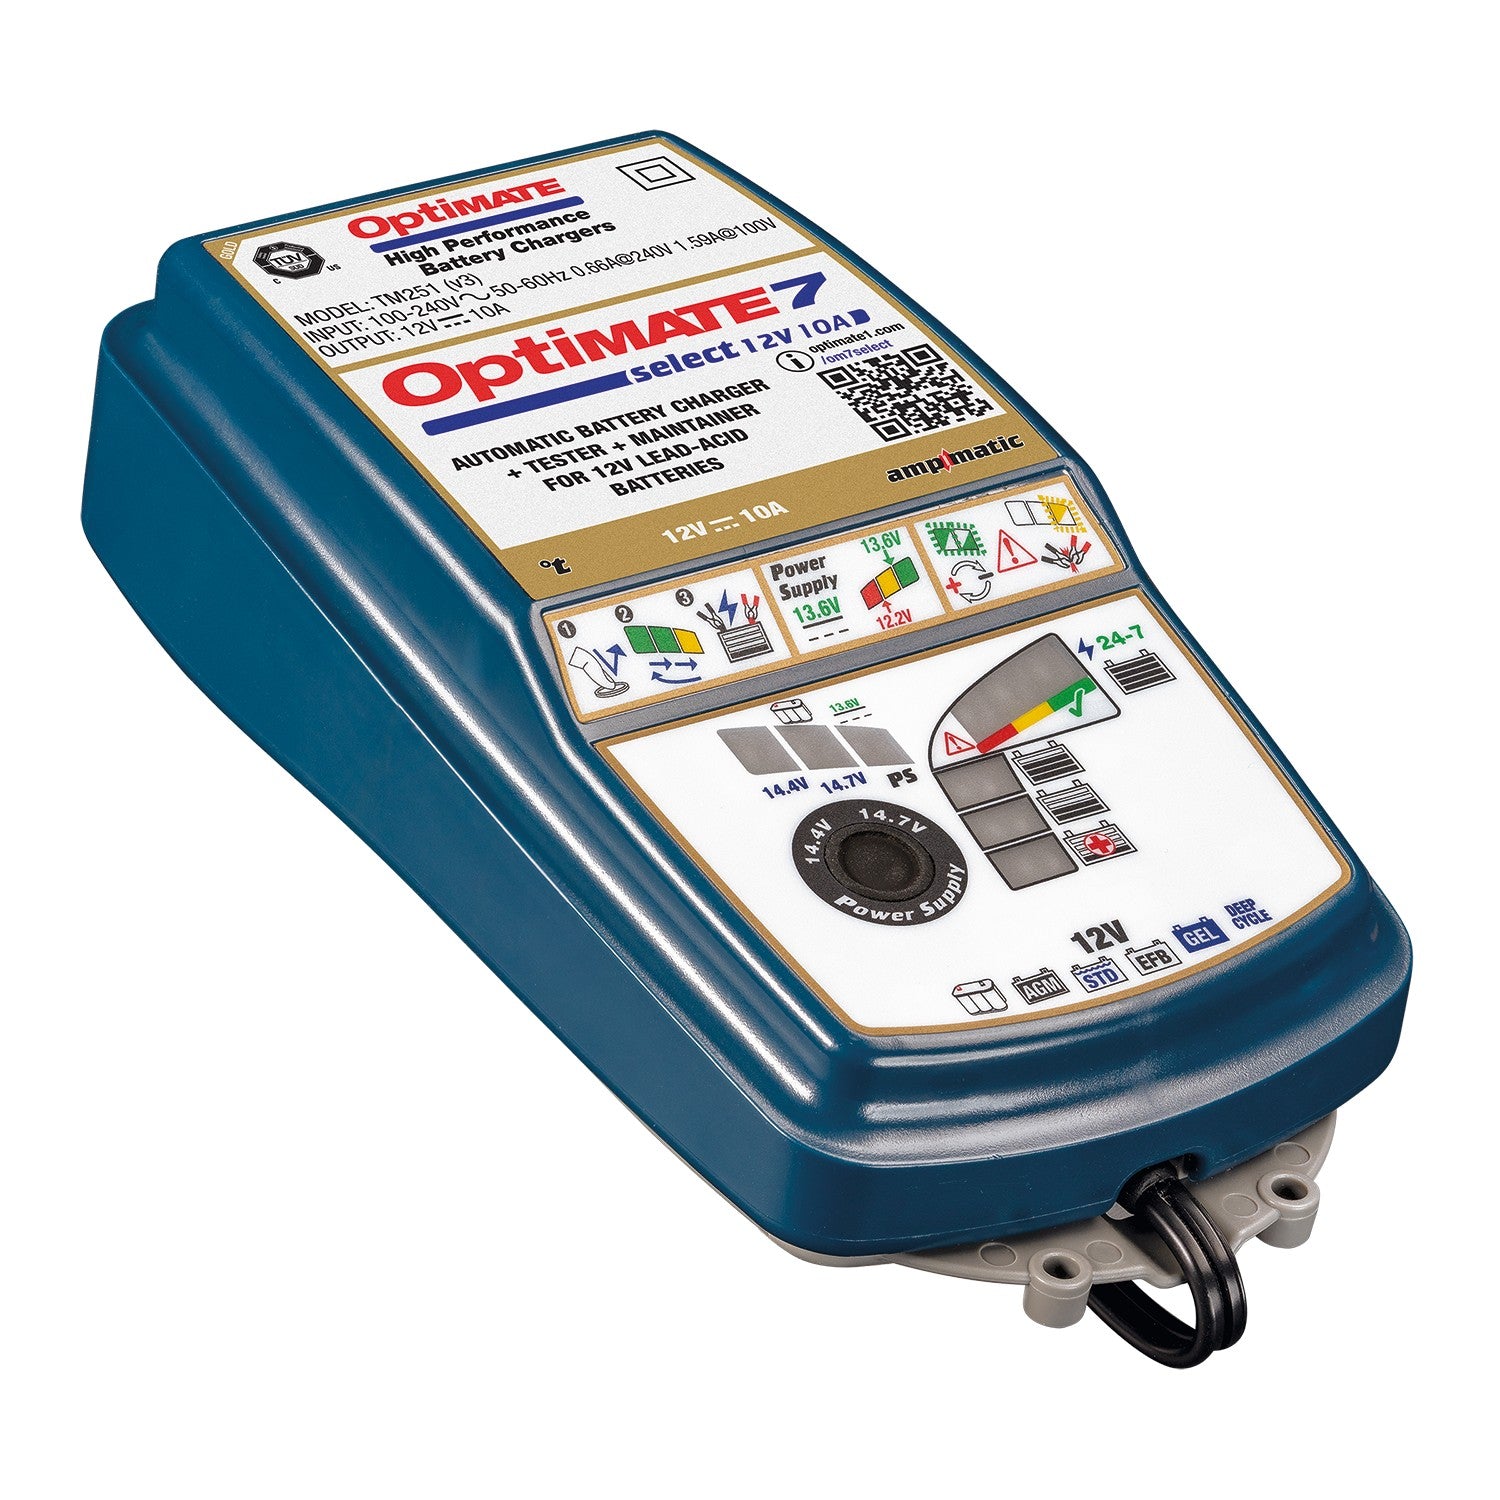 TecMATE OptiMATE 7 Select バッテリー充電器 TM-257 – バッテリー 